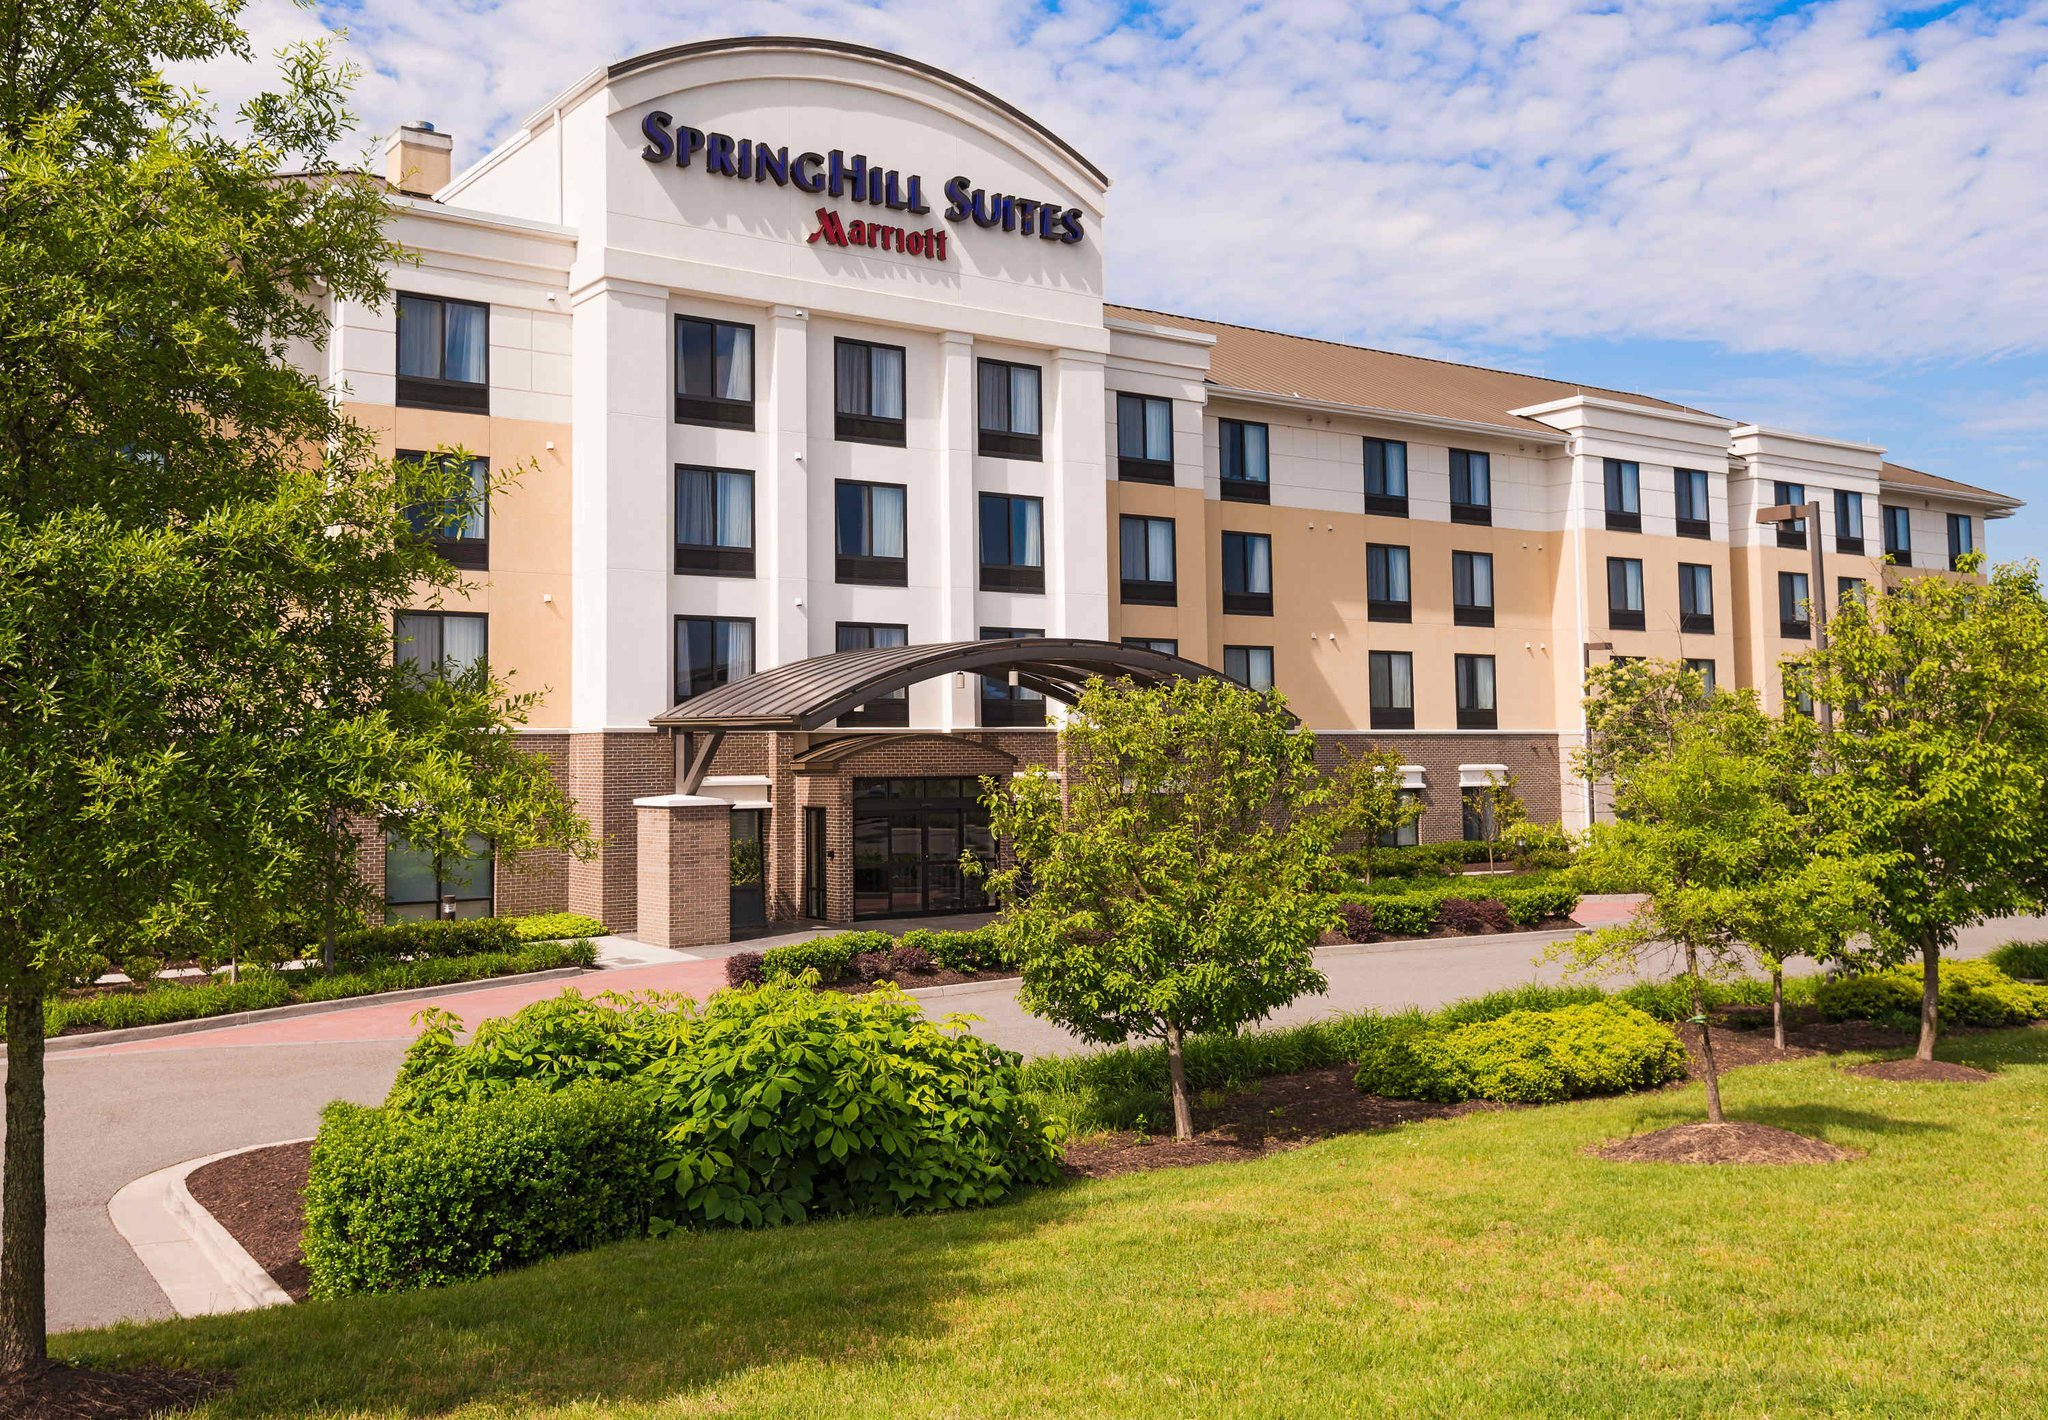 Photo of SpringHill Suites Richmond Northwest, Henrico, VA